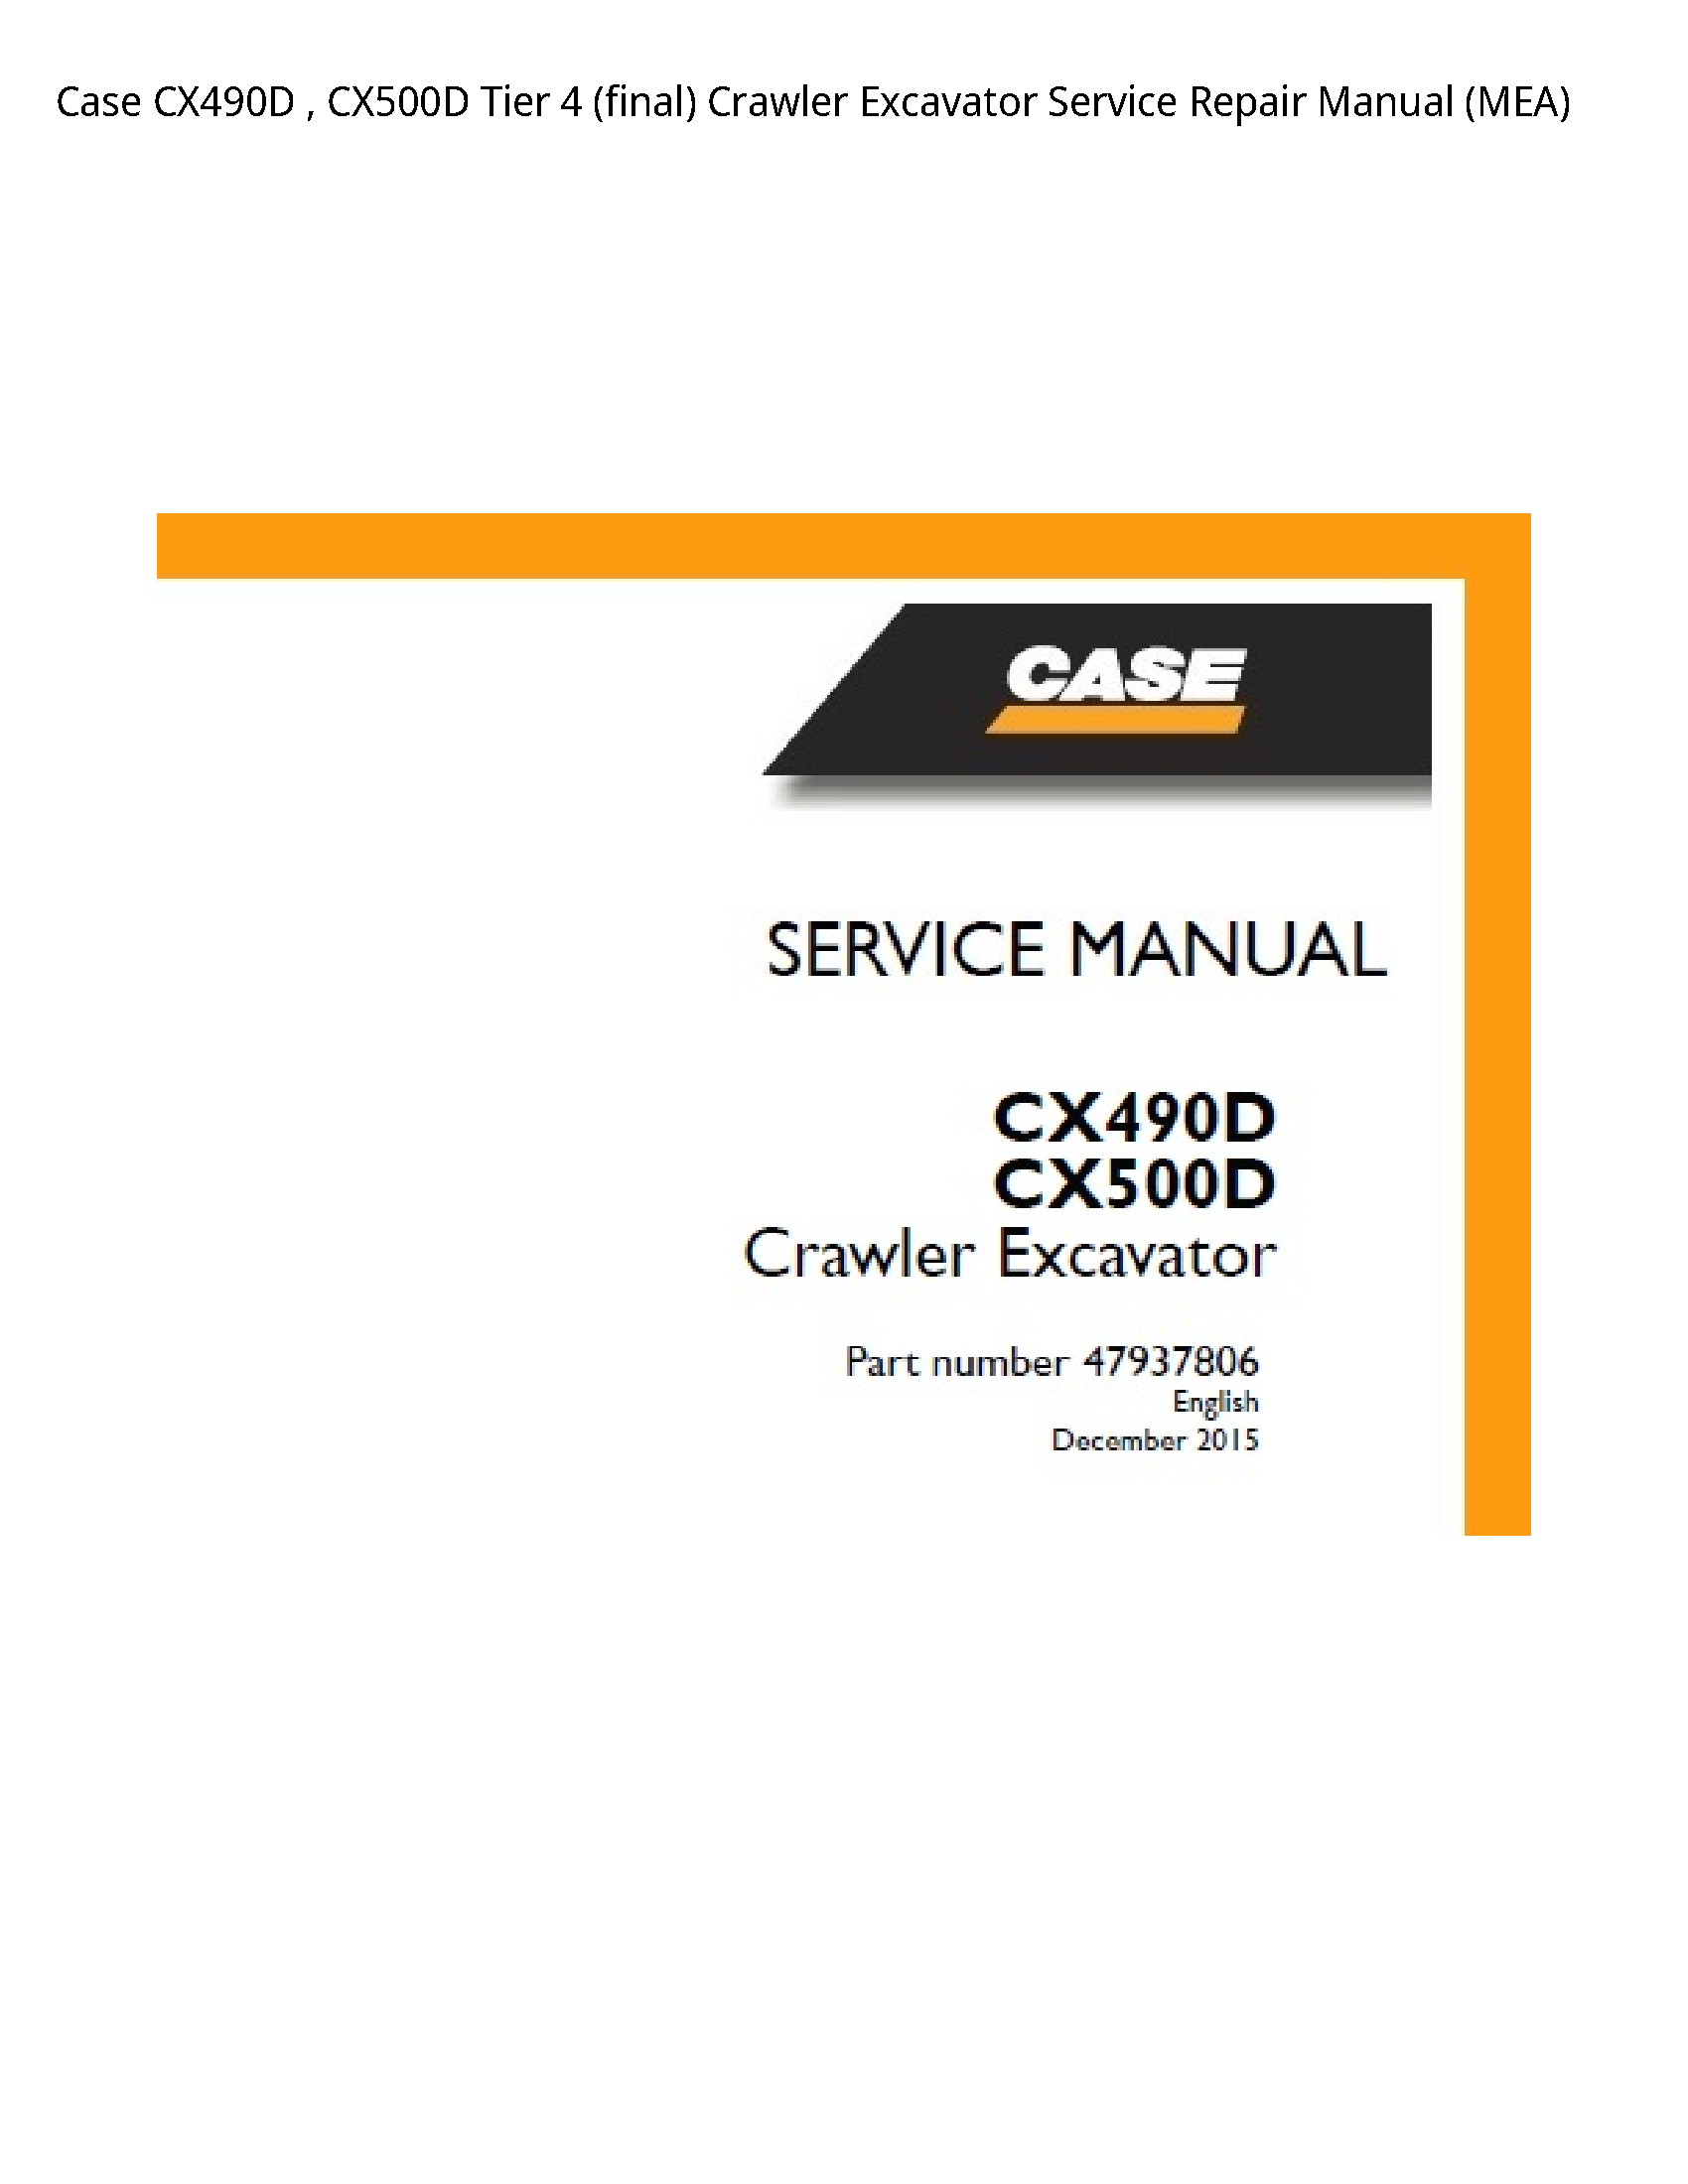 Case/Case IH CX490D Tier (final) Crawler Excavator manual